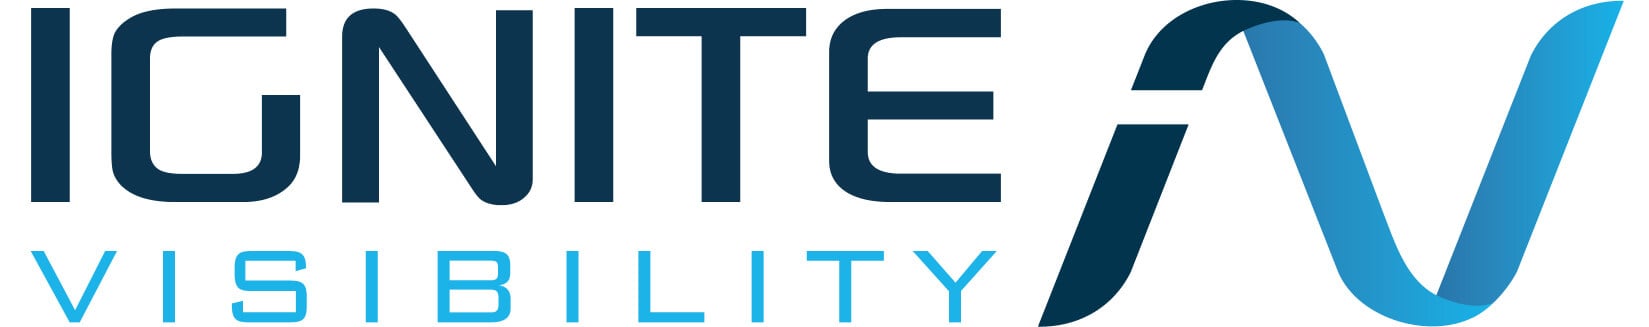 Best Reputation Management Company Logo: Ignite Visibility